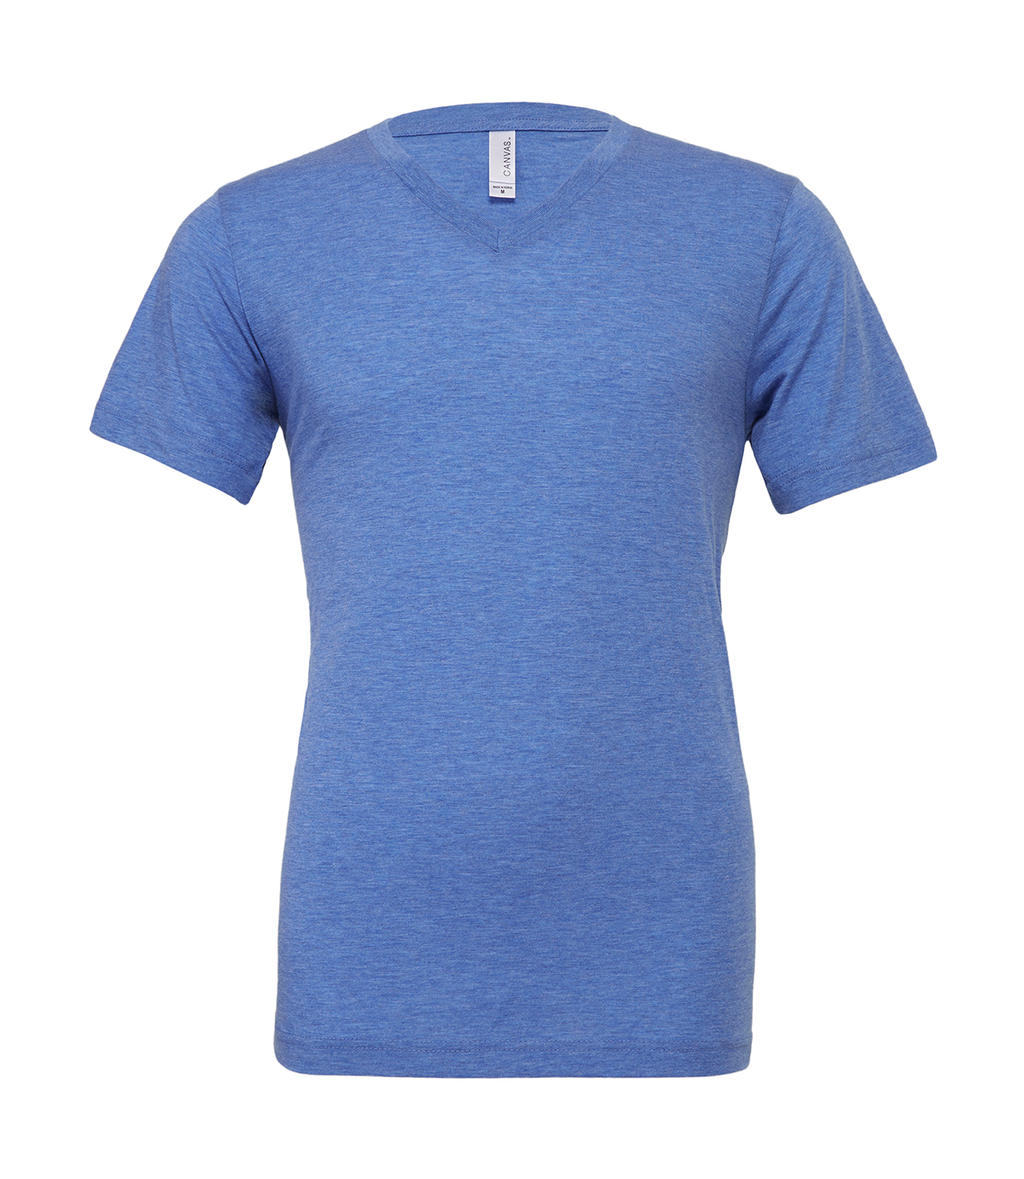  Unisex Triblend V-Neck T-Shirt in Farbe Blue Triblend